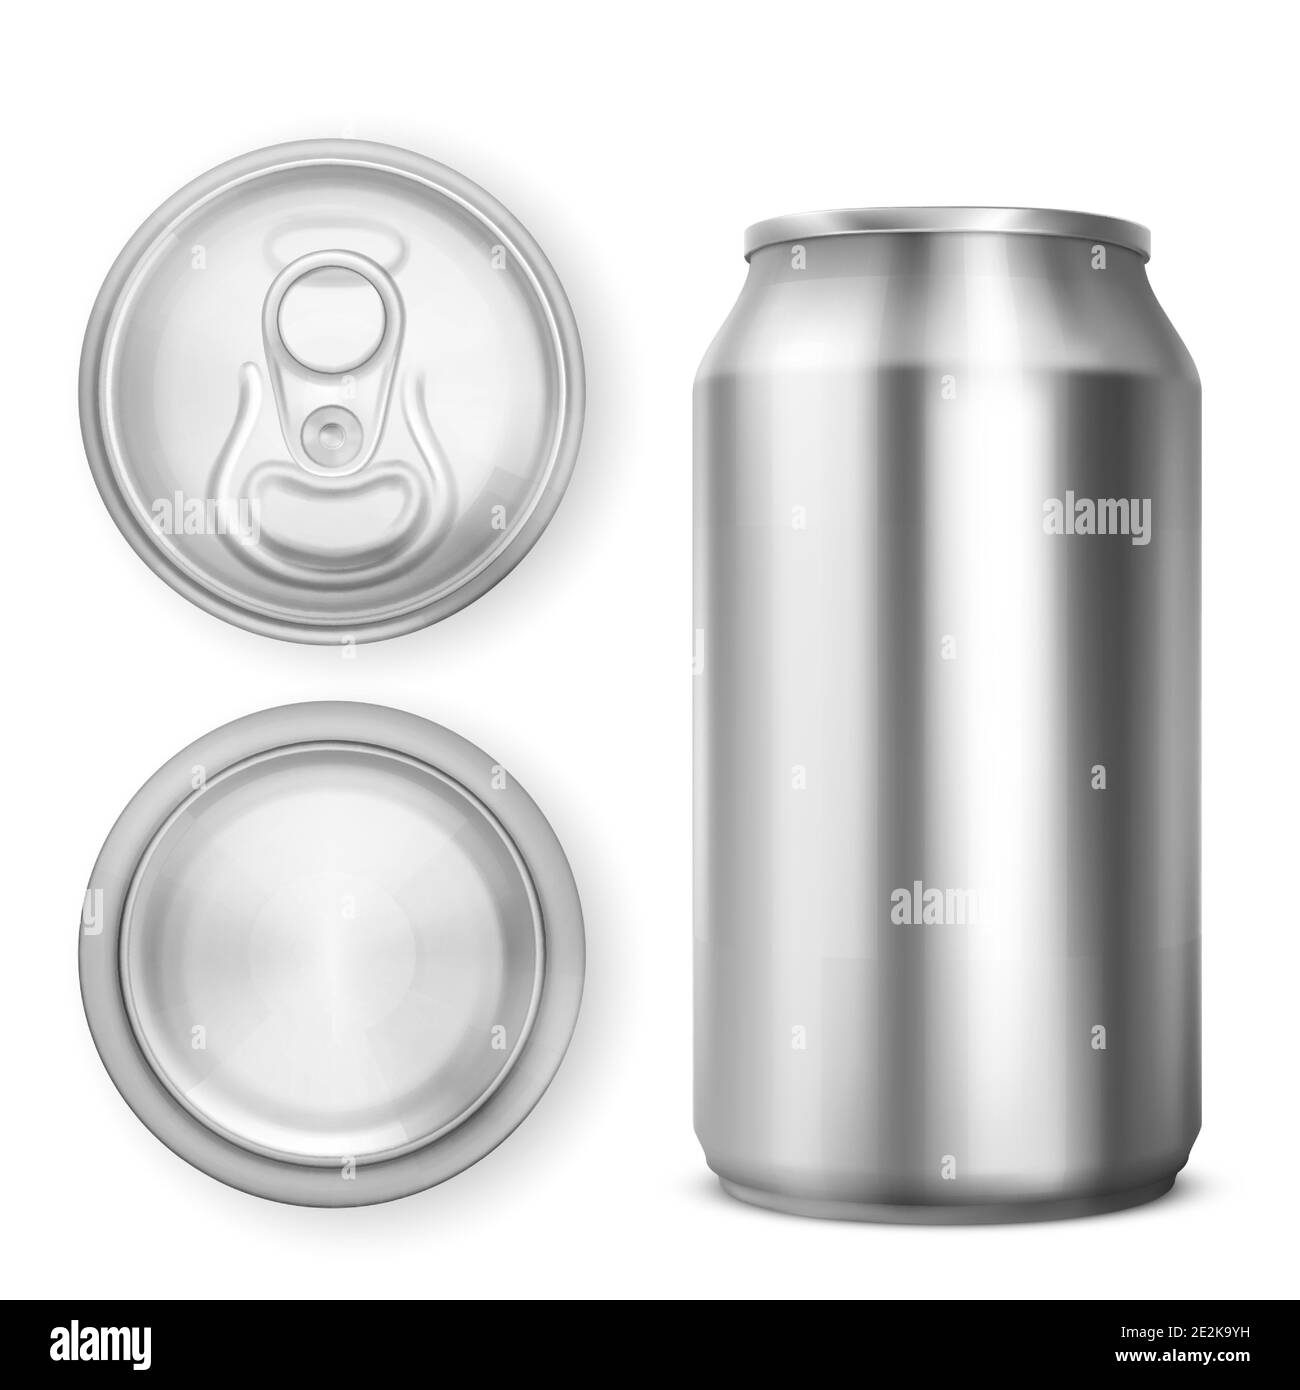 Lata de aluminio para refrescos o cerveza en la vista frontal, superior e inferior. Vector realista mascup de estaño metálico blanco puede con anillo tirar de la tapa